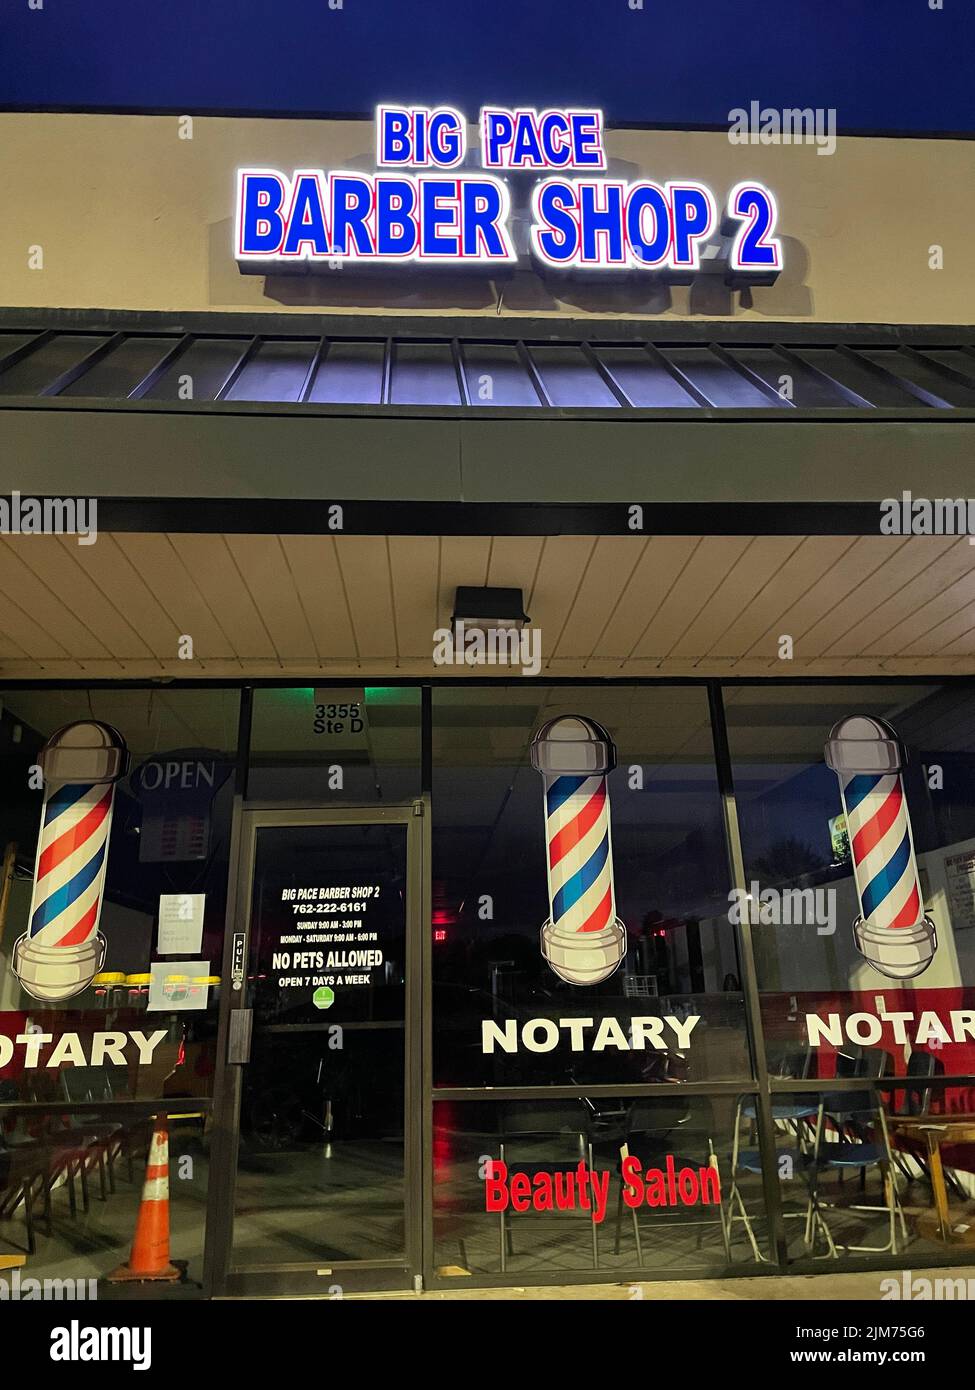 Grovetown, Ga USA - 04 29 22: Big Pace Barber Shop 2 entrance at night Stock Photo